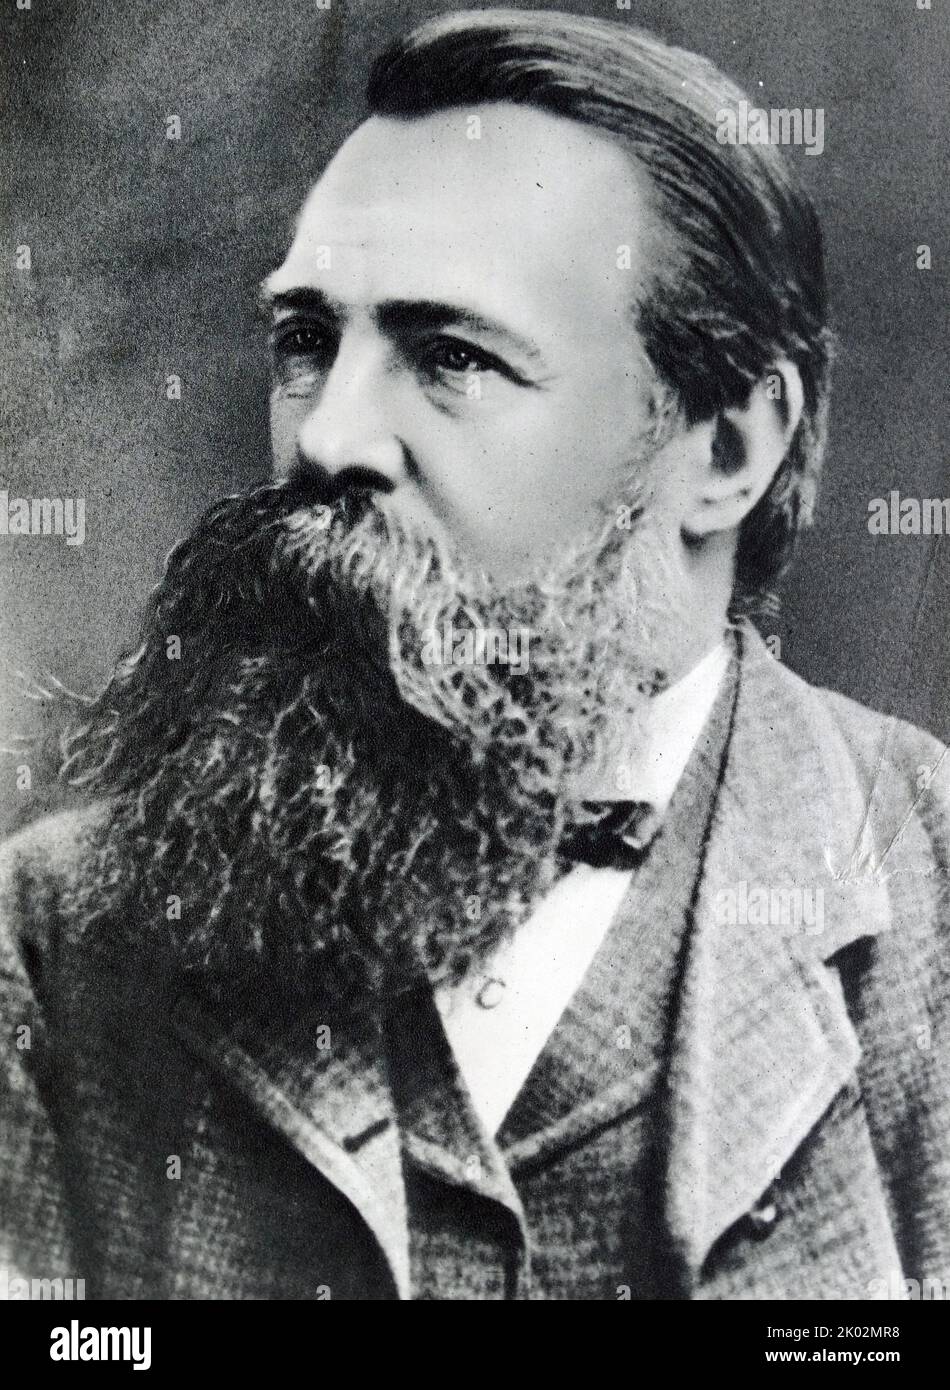 Friedrich Engels (1820 - 1895), German philosopher, historian, political scientist and revolutionary socialist. Stock Photo